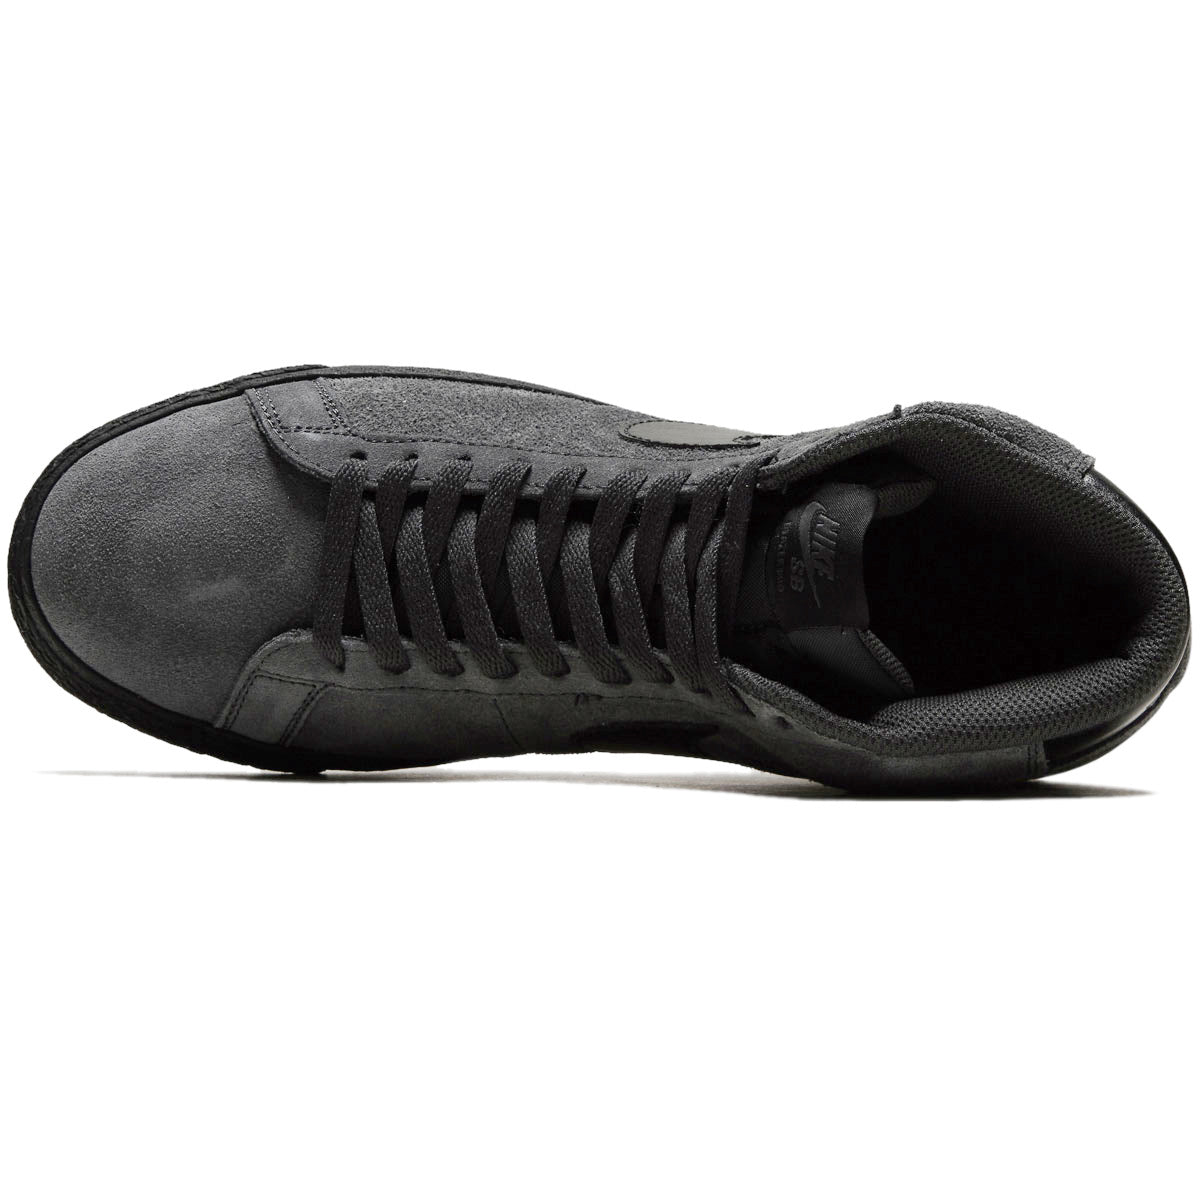 Nike SB Zoom Blazer Mid Shoes - Anthracite/Black/Anthracite/Black image 3